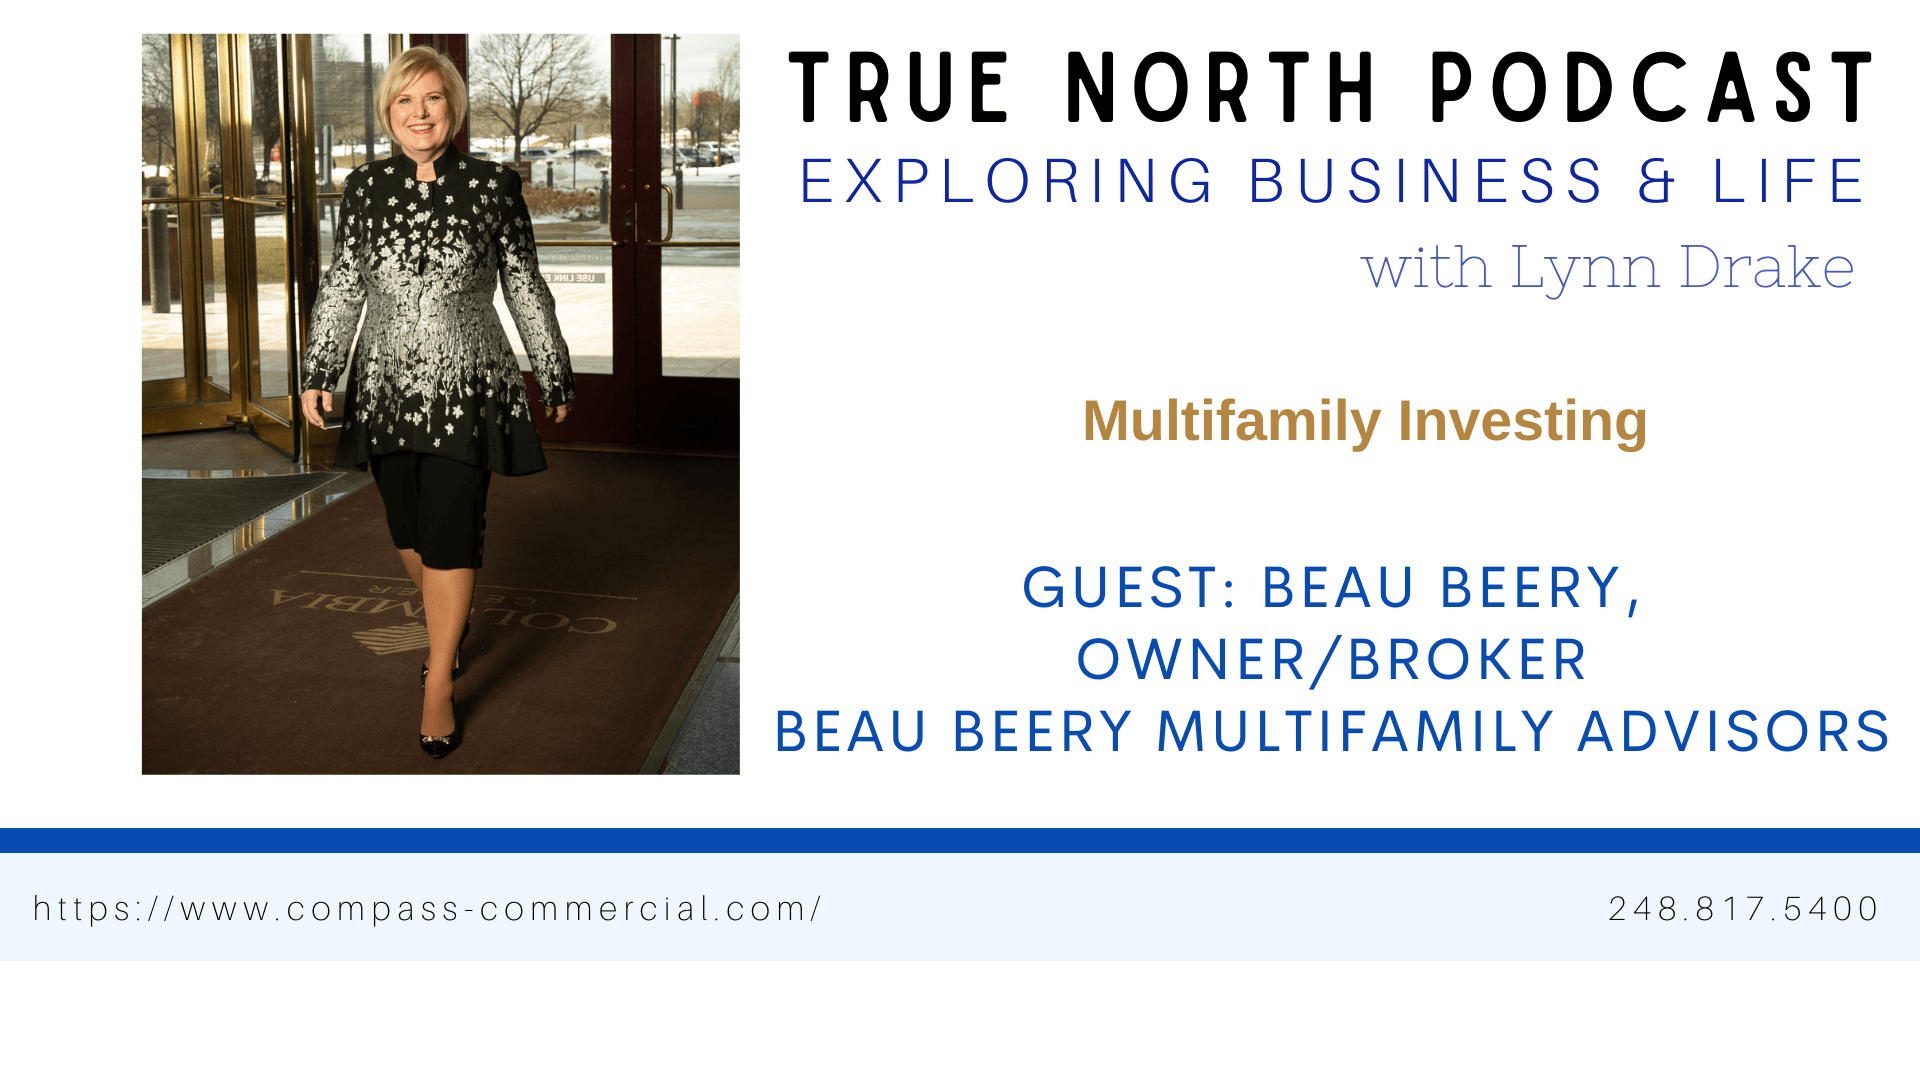 Beau Beery, Multifamily TNP Podcast 1.3.22